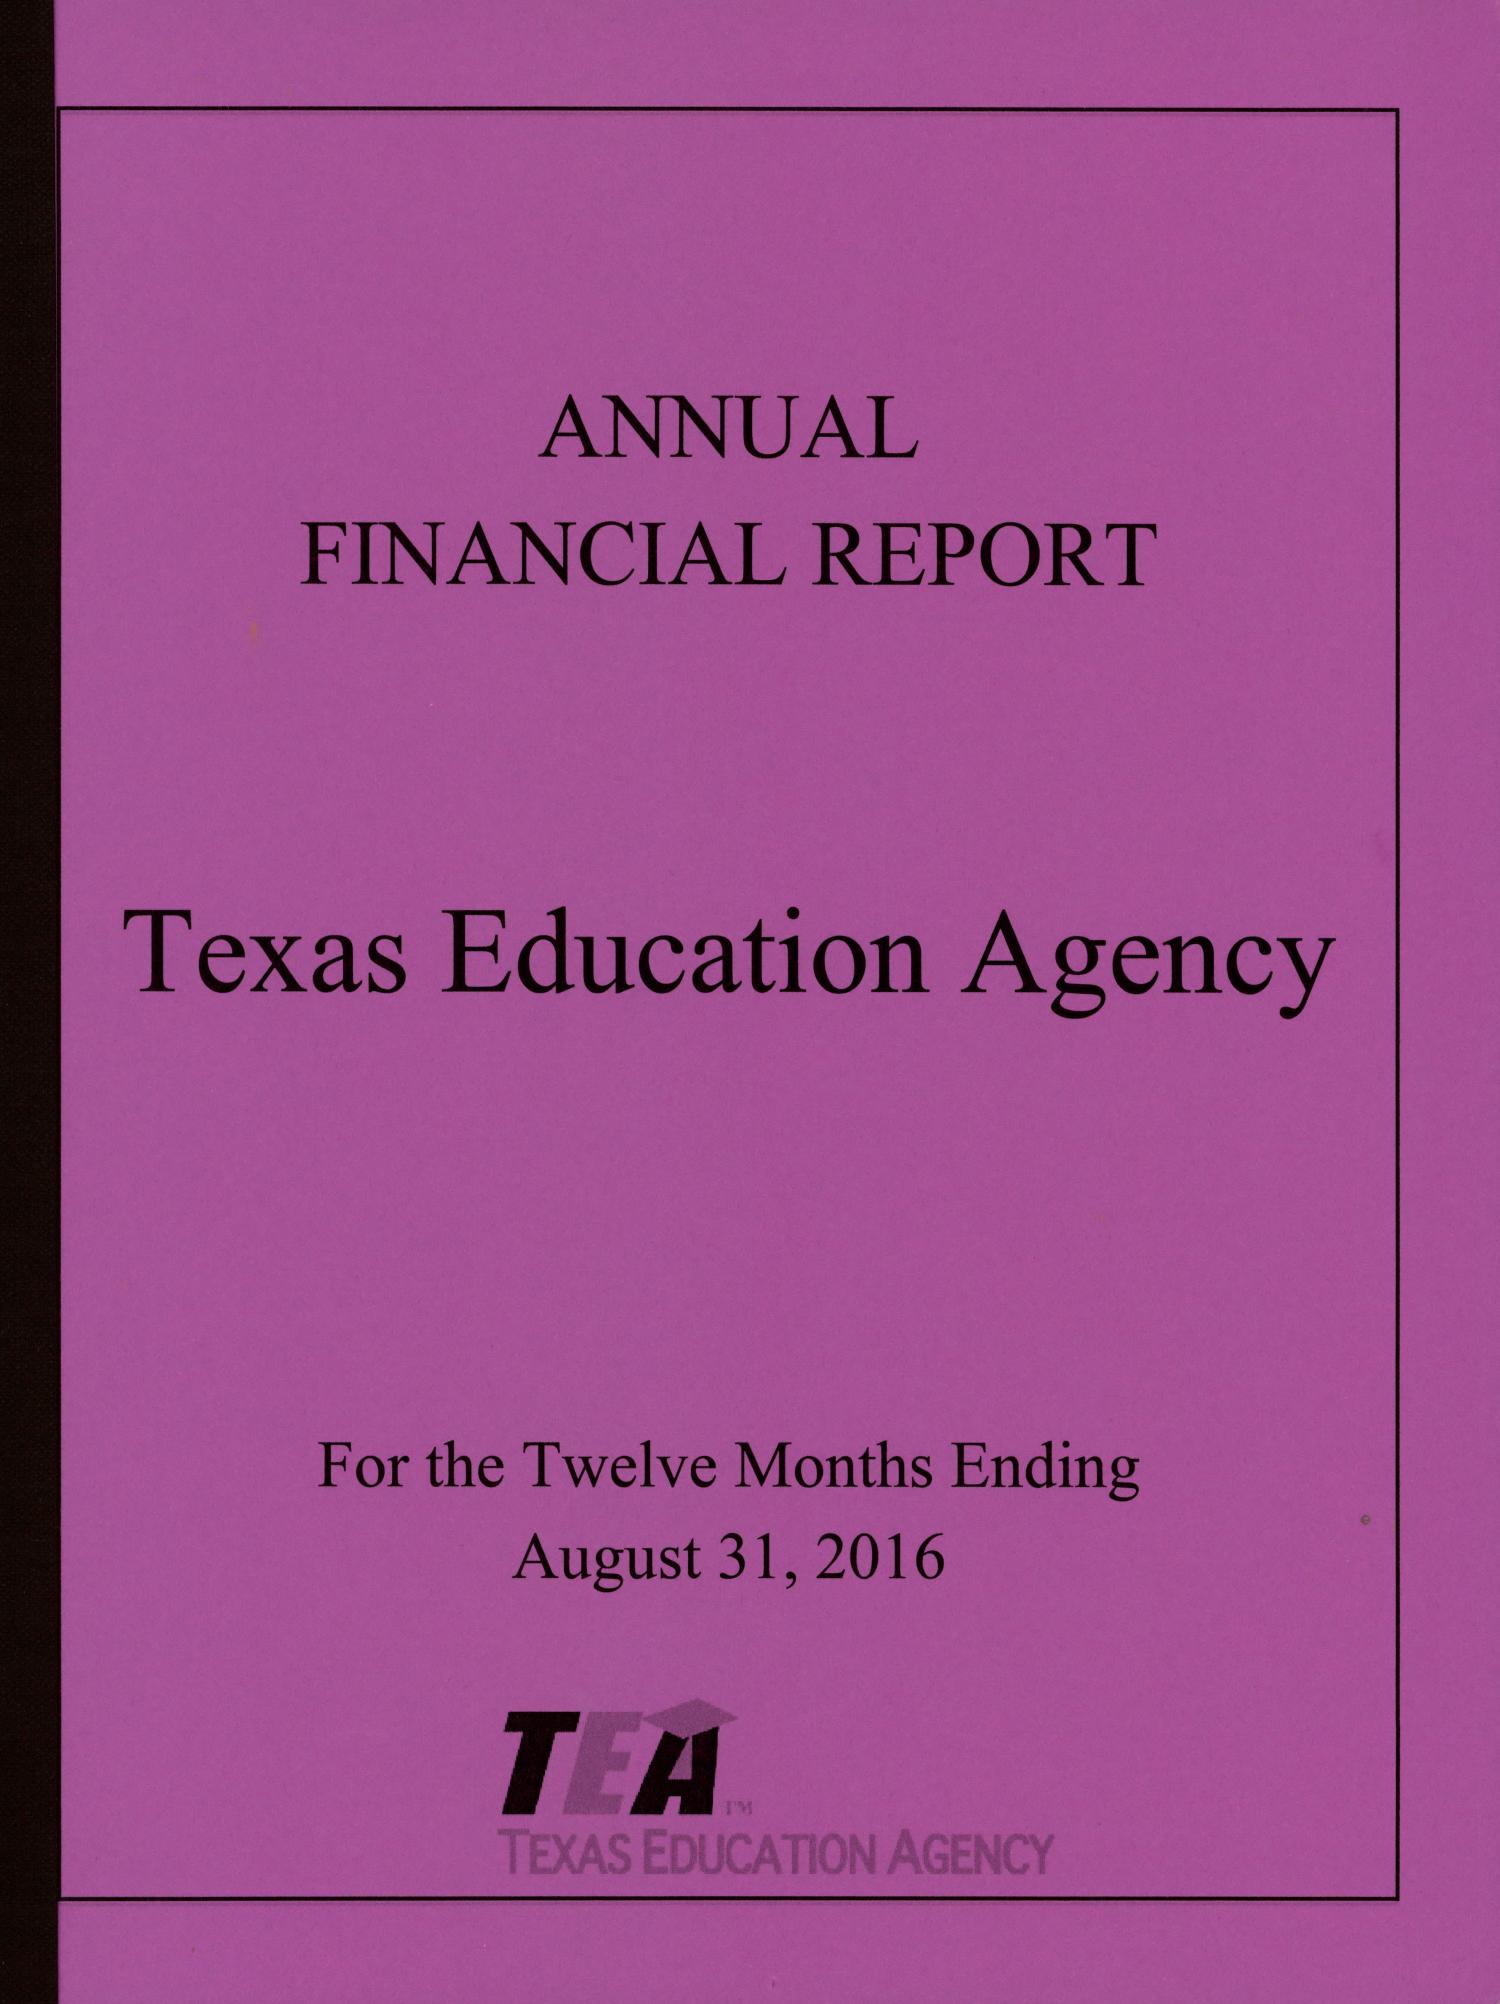 summary of finance texas education agency